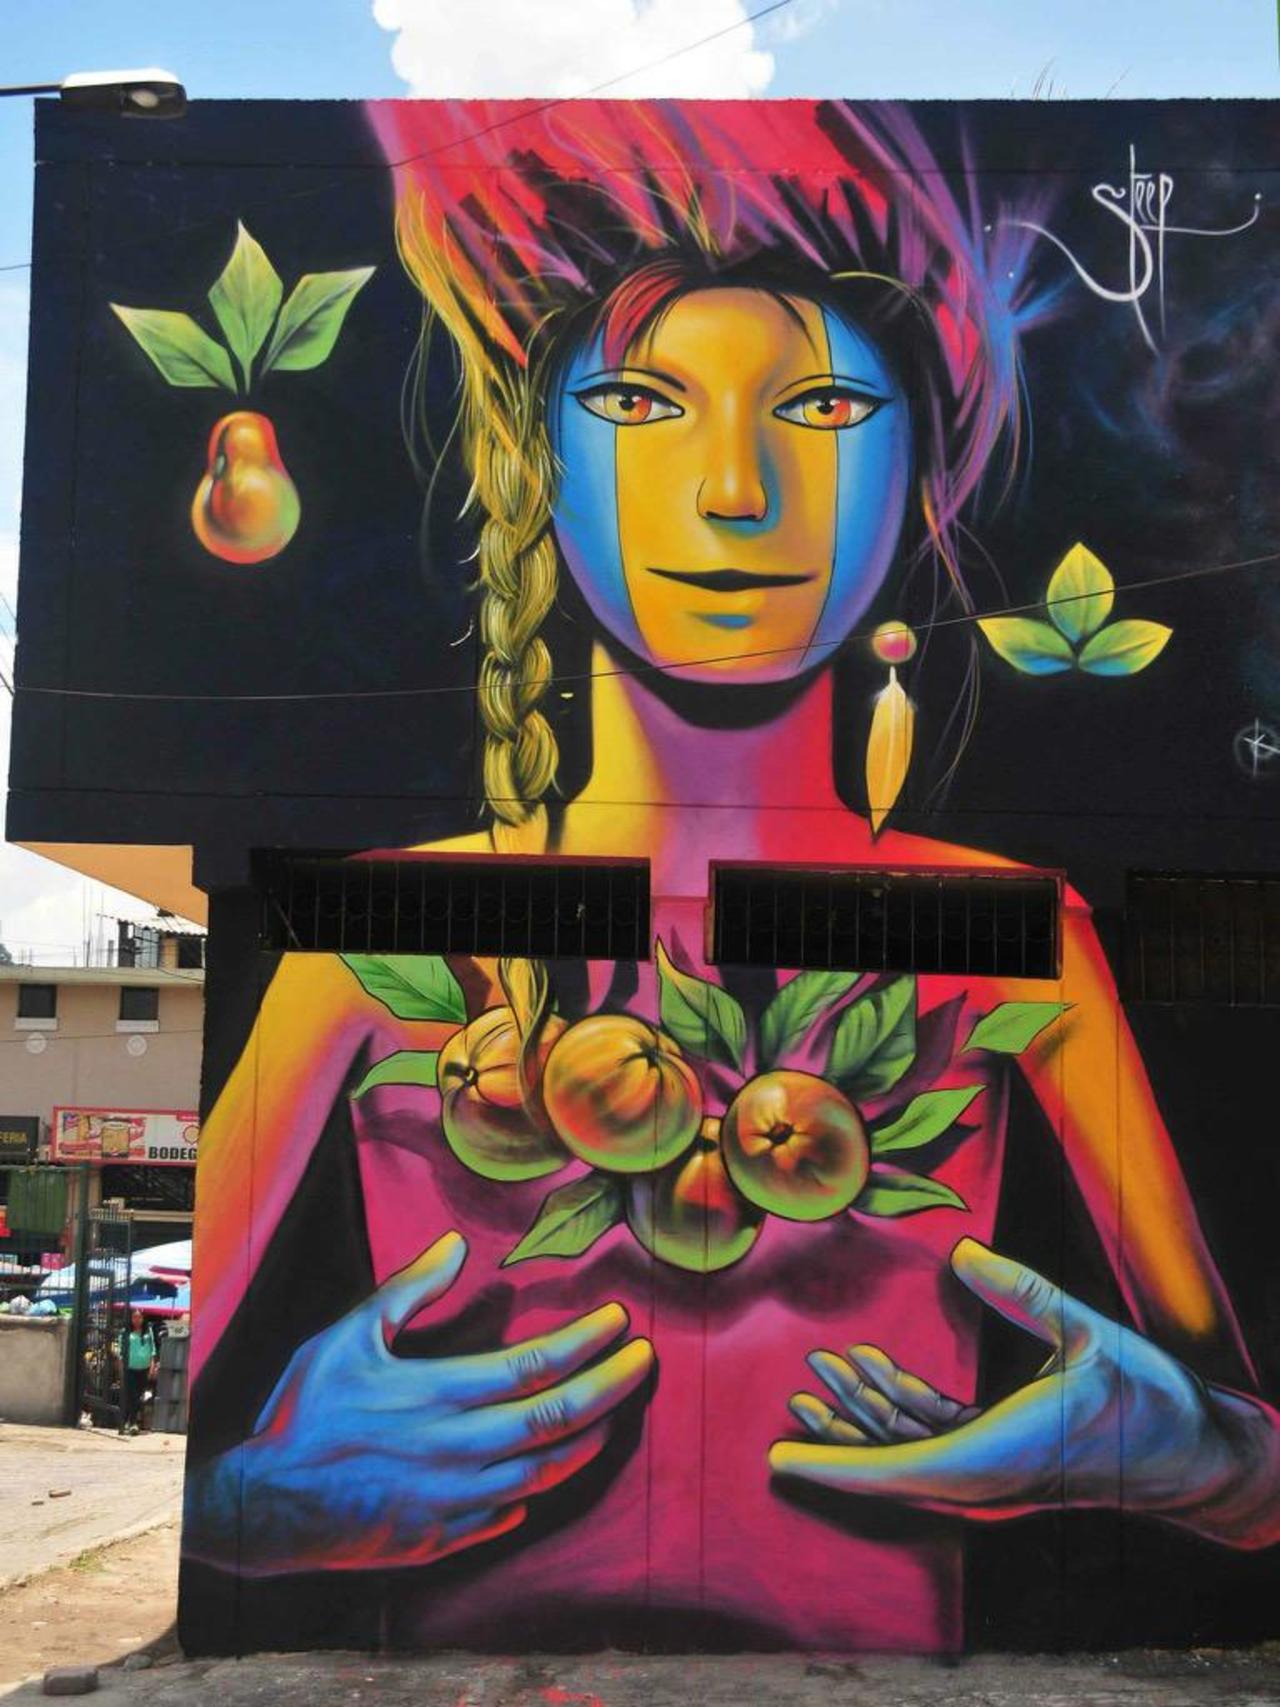 Street Art by Steep #art #graffiti #mural #streetart http://t.co/dKGIfl0HiR http://twitter.com/GoogleStreetArt/status/652717552435638272/photo/1/large?utm_source=fb&utm_medium=fb&utm_campaign=charlesjackso14&utm_content=652720469402103808 … … … … http://twitter.com/charlesjackso14/status/652728483173507072